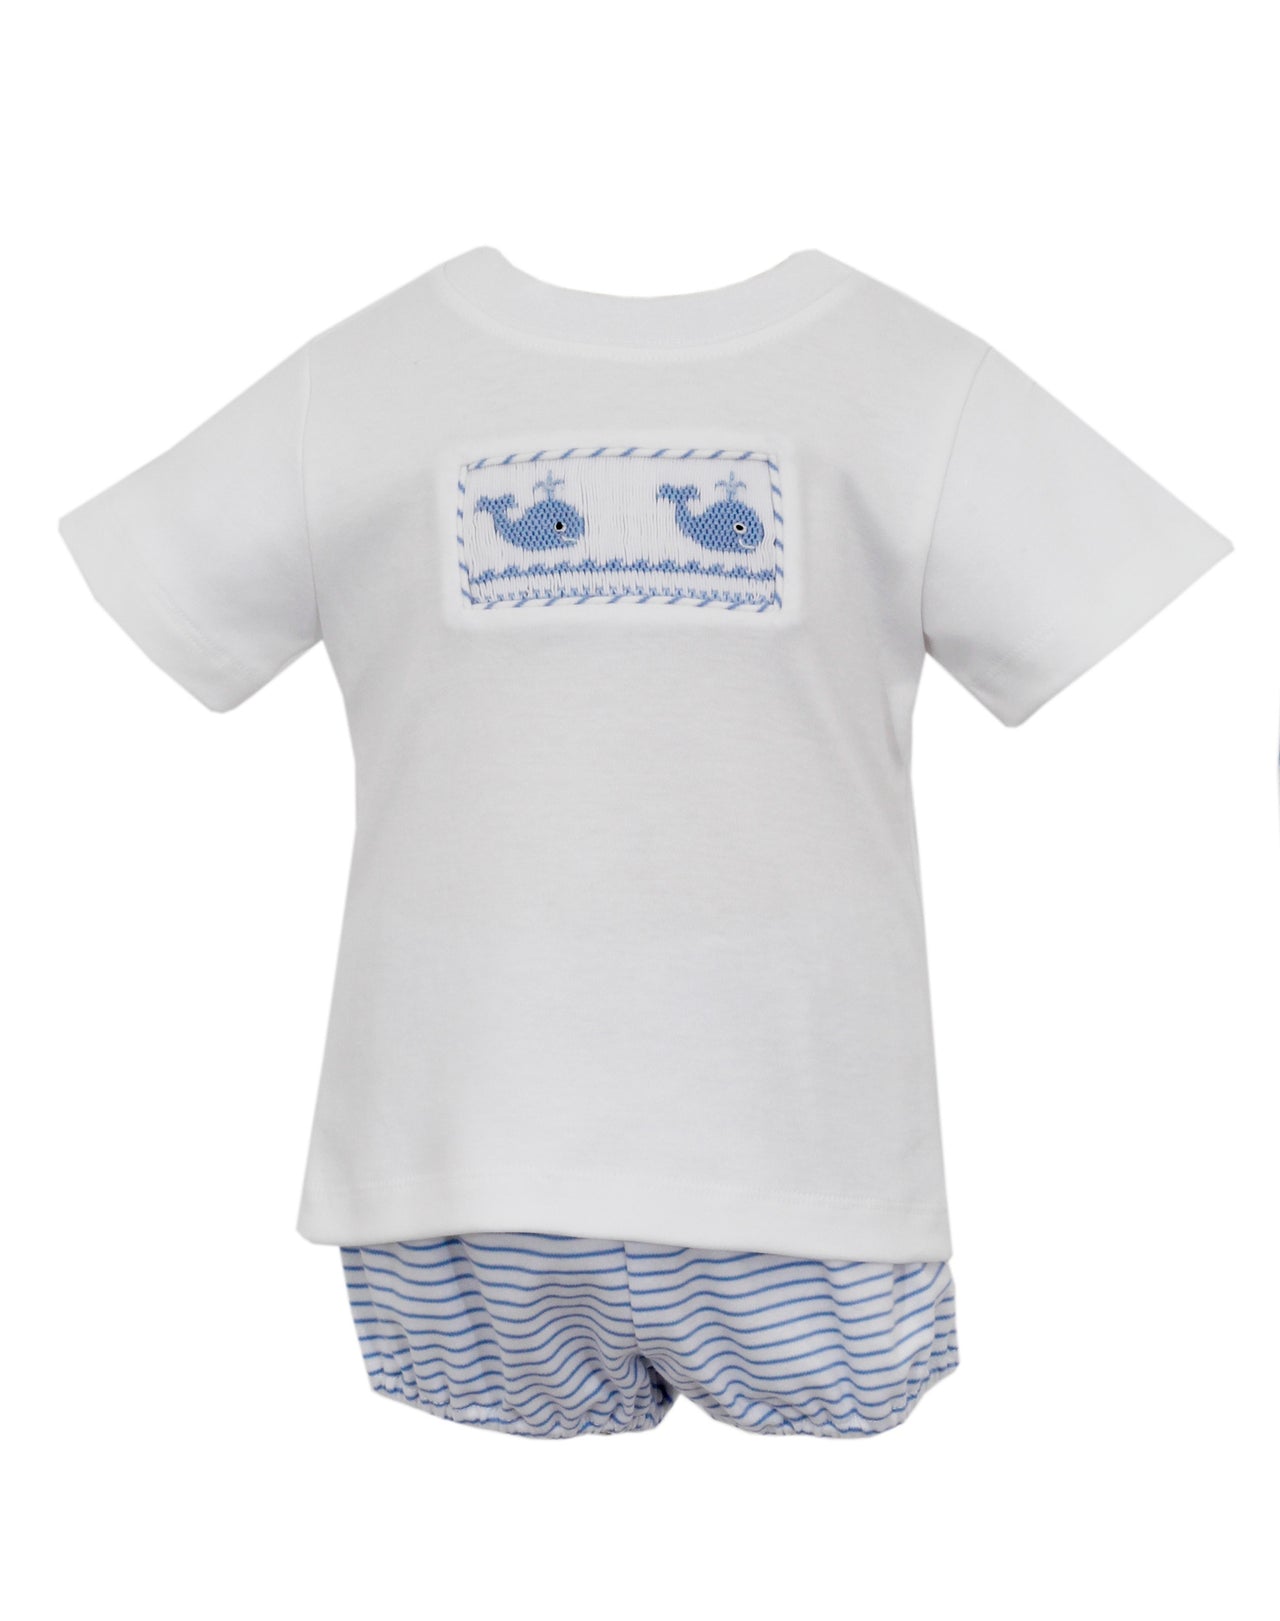 Petit Bebe Whale Lt Blue Stripe Knit Boy's T-Shirt Set 435M-MS24 5103